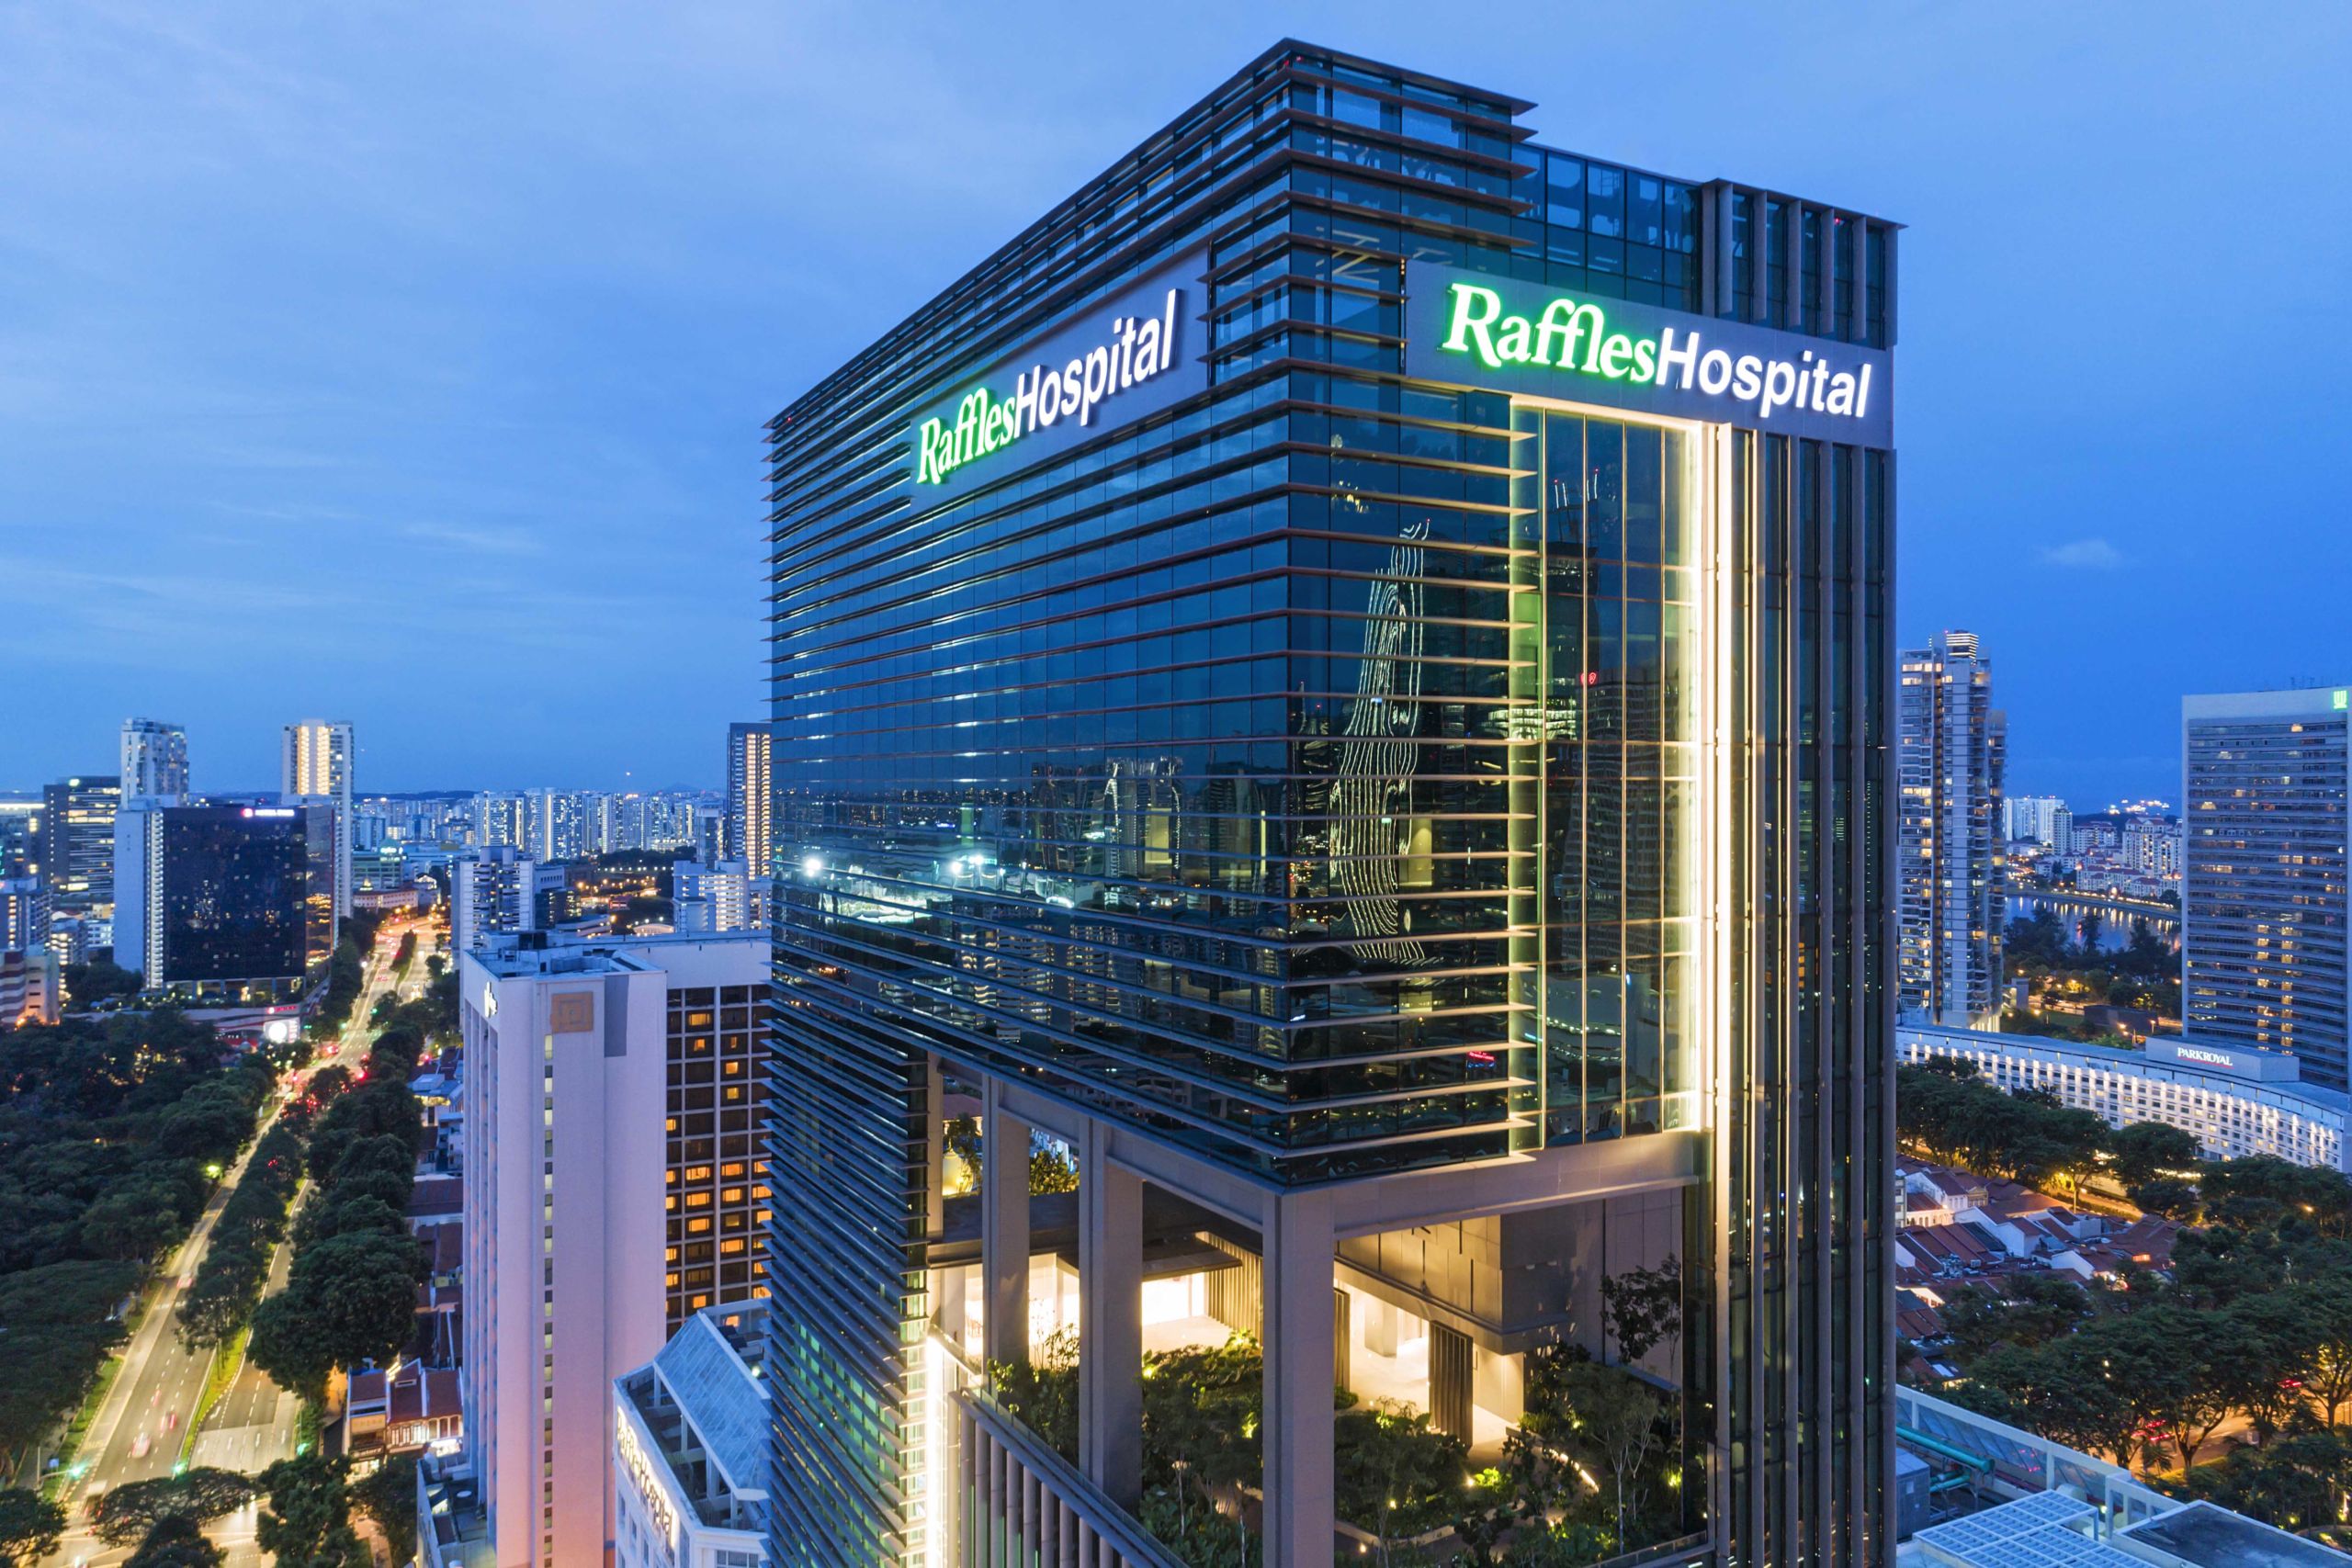 Raffles Hospital Blue Hour LR scaled 1